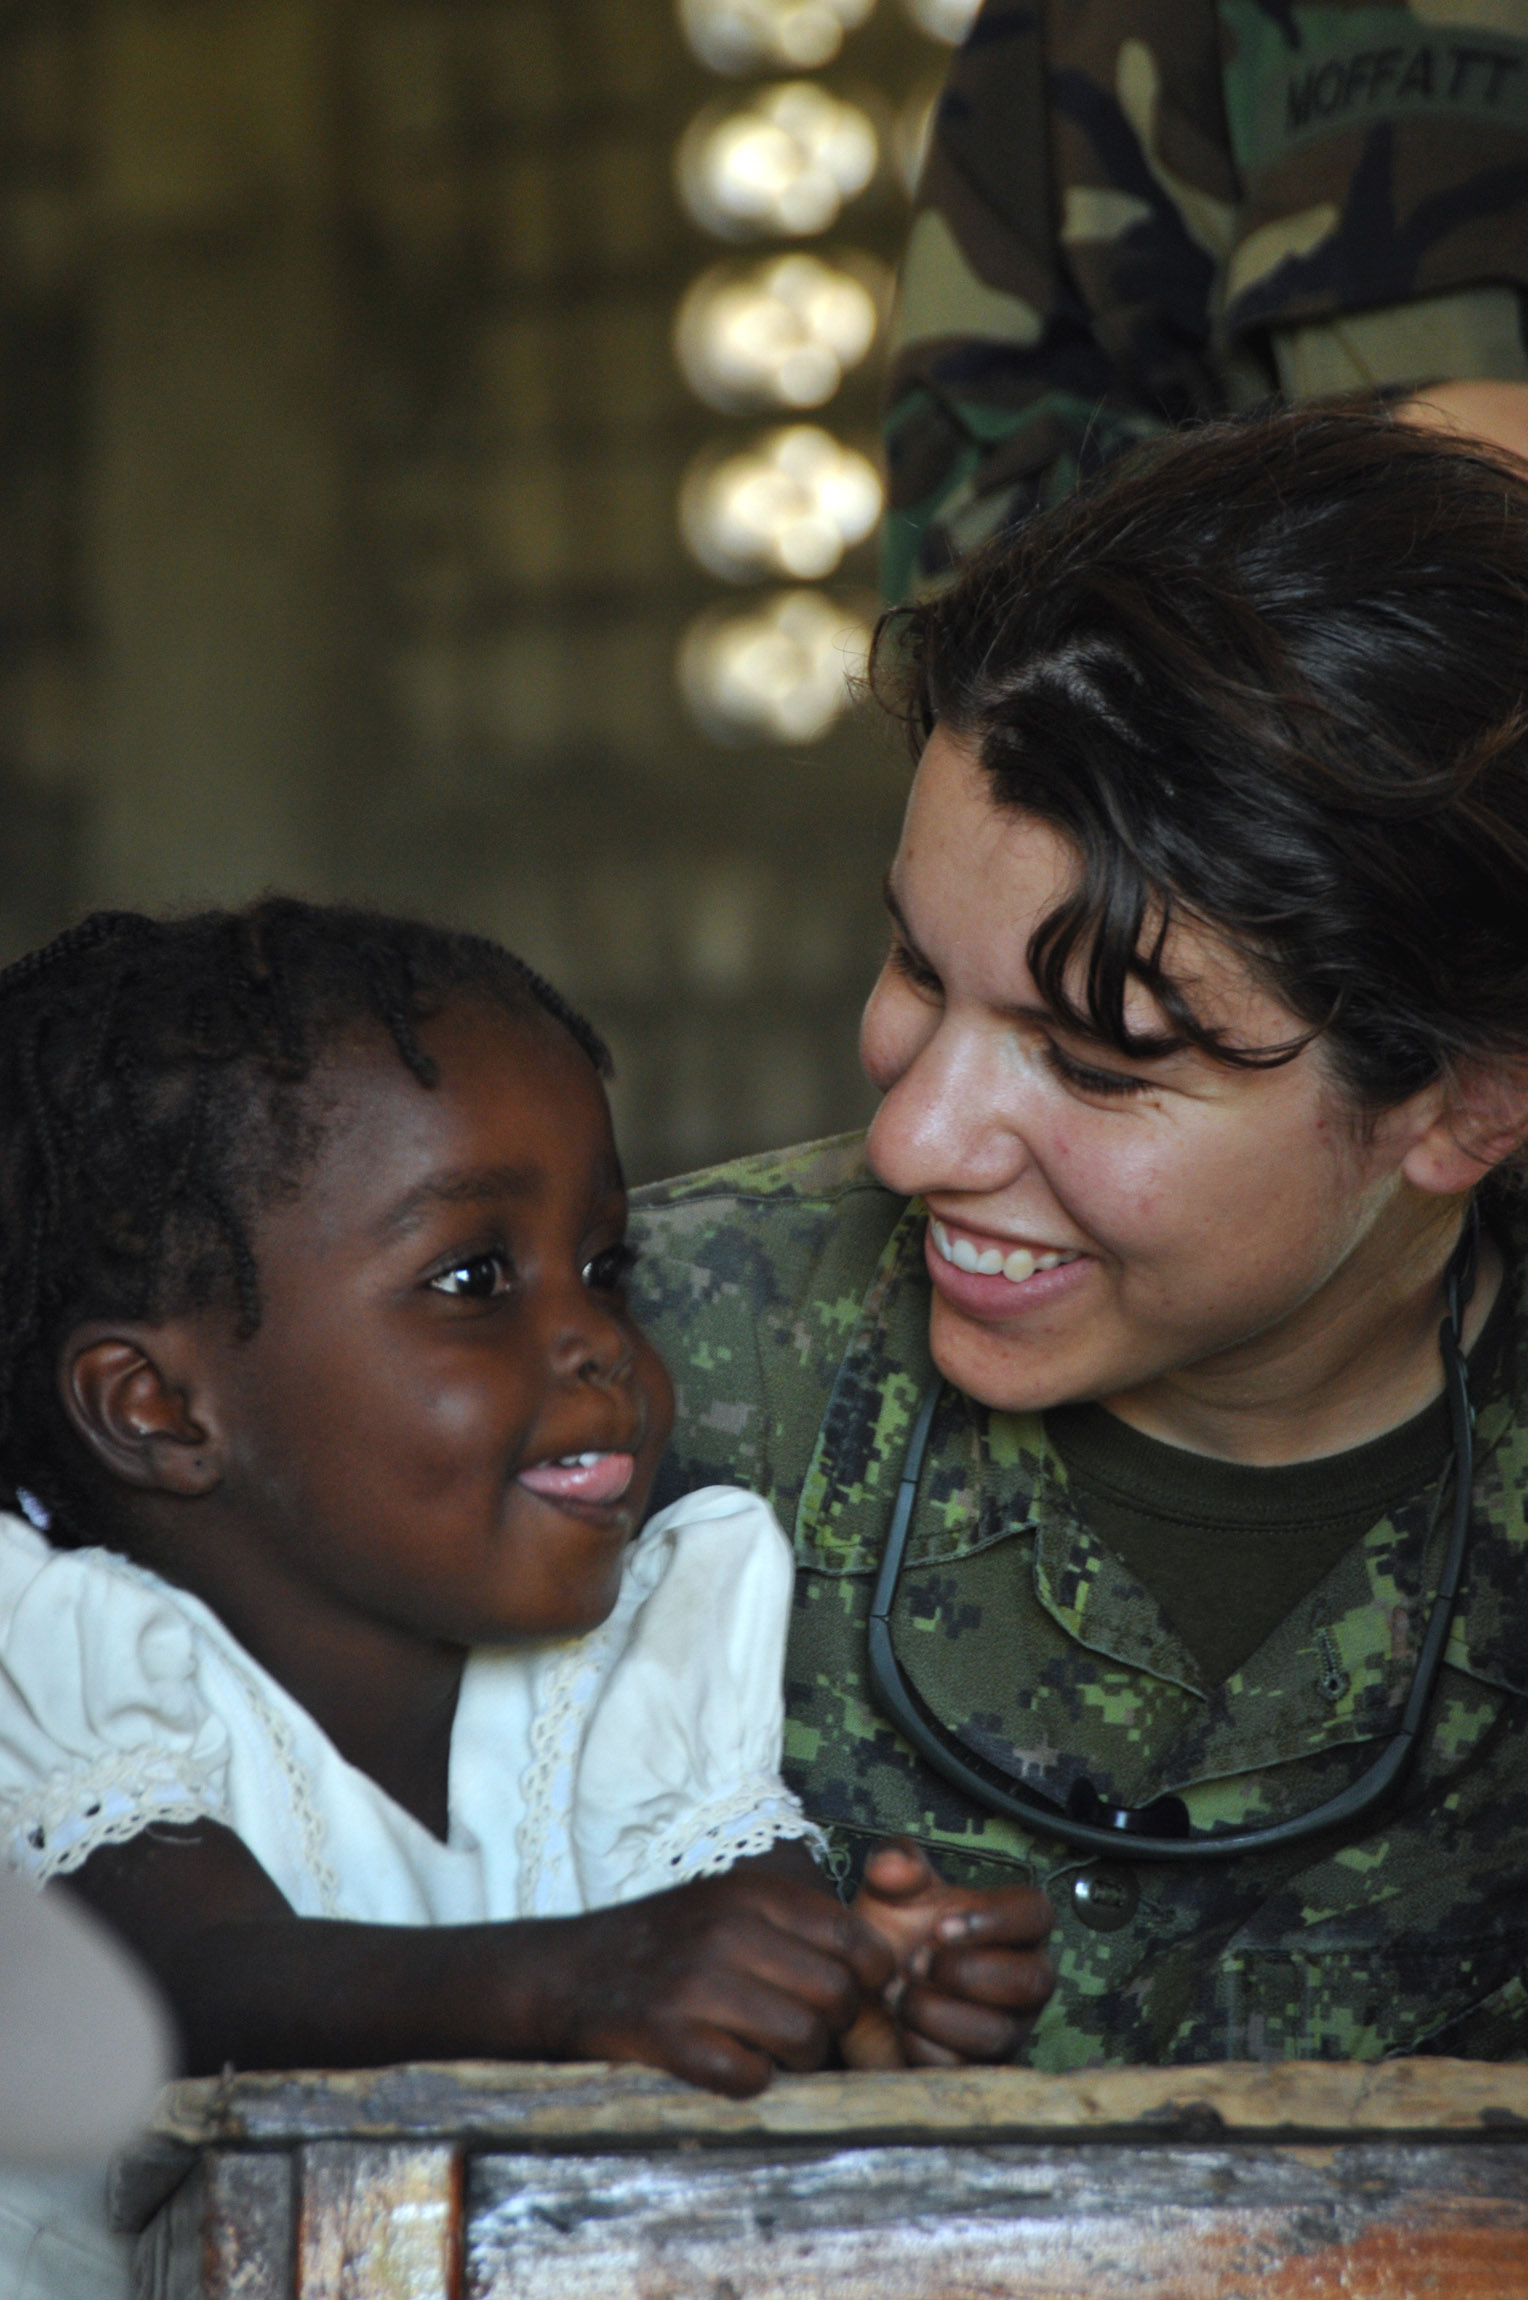 Friendly Canadian medic examines a smiling Haitian earthquake survivor